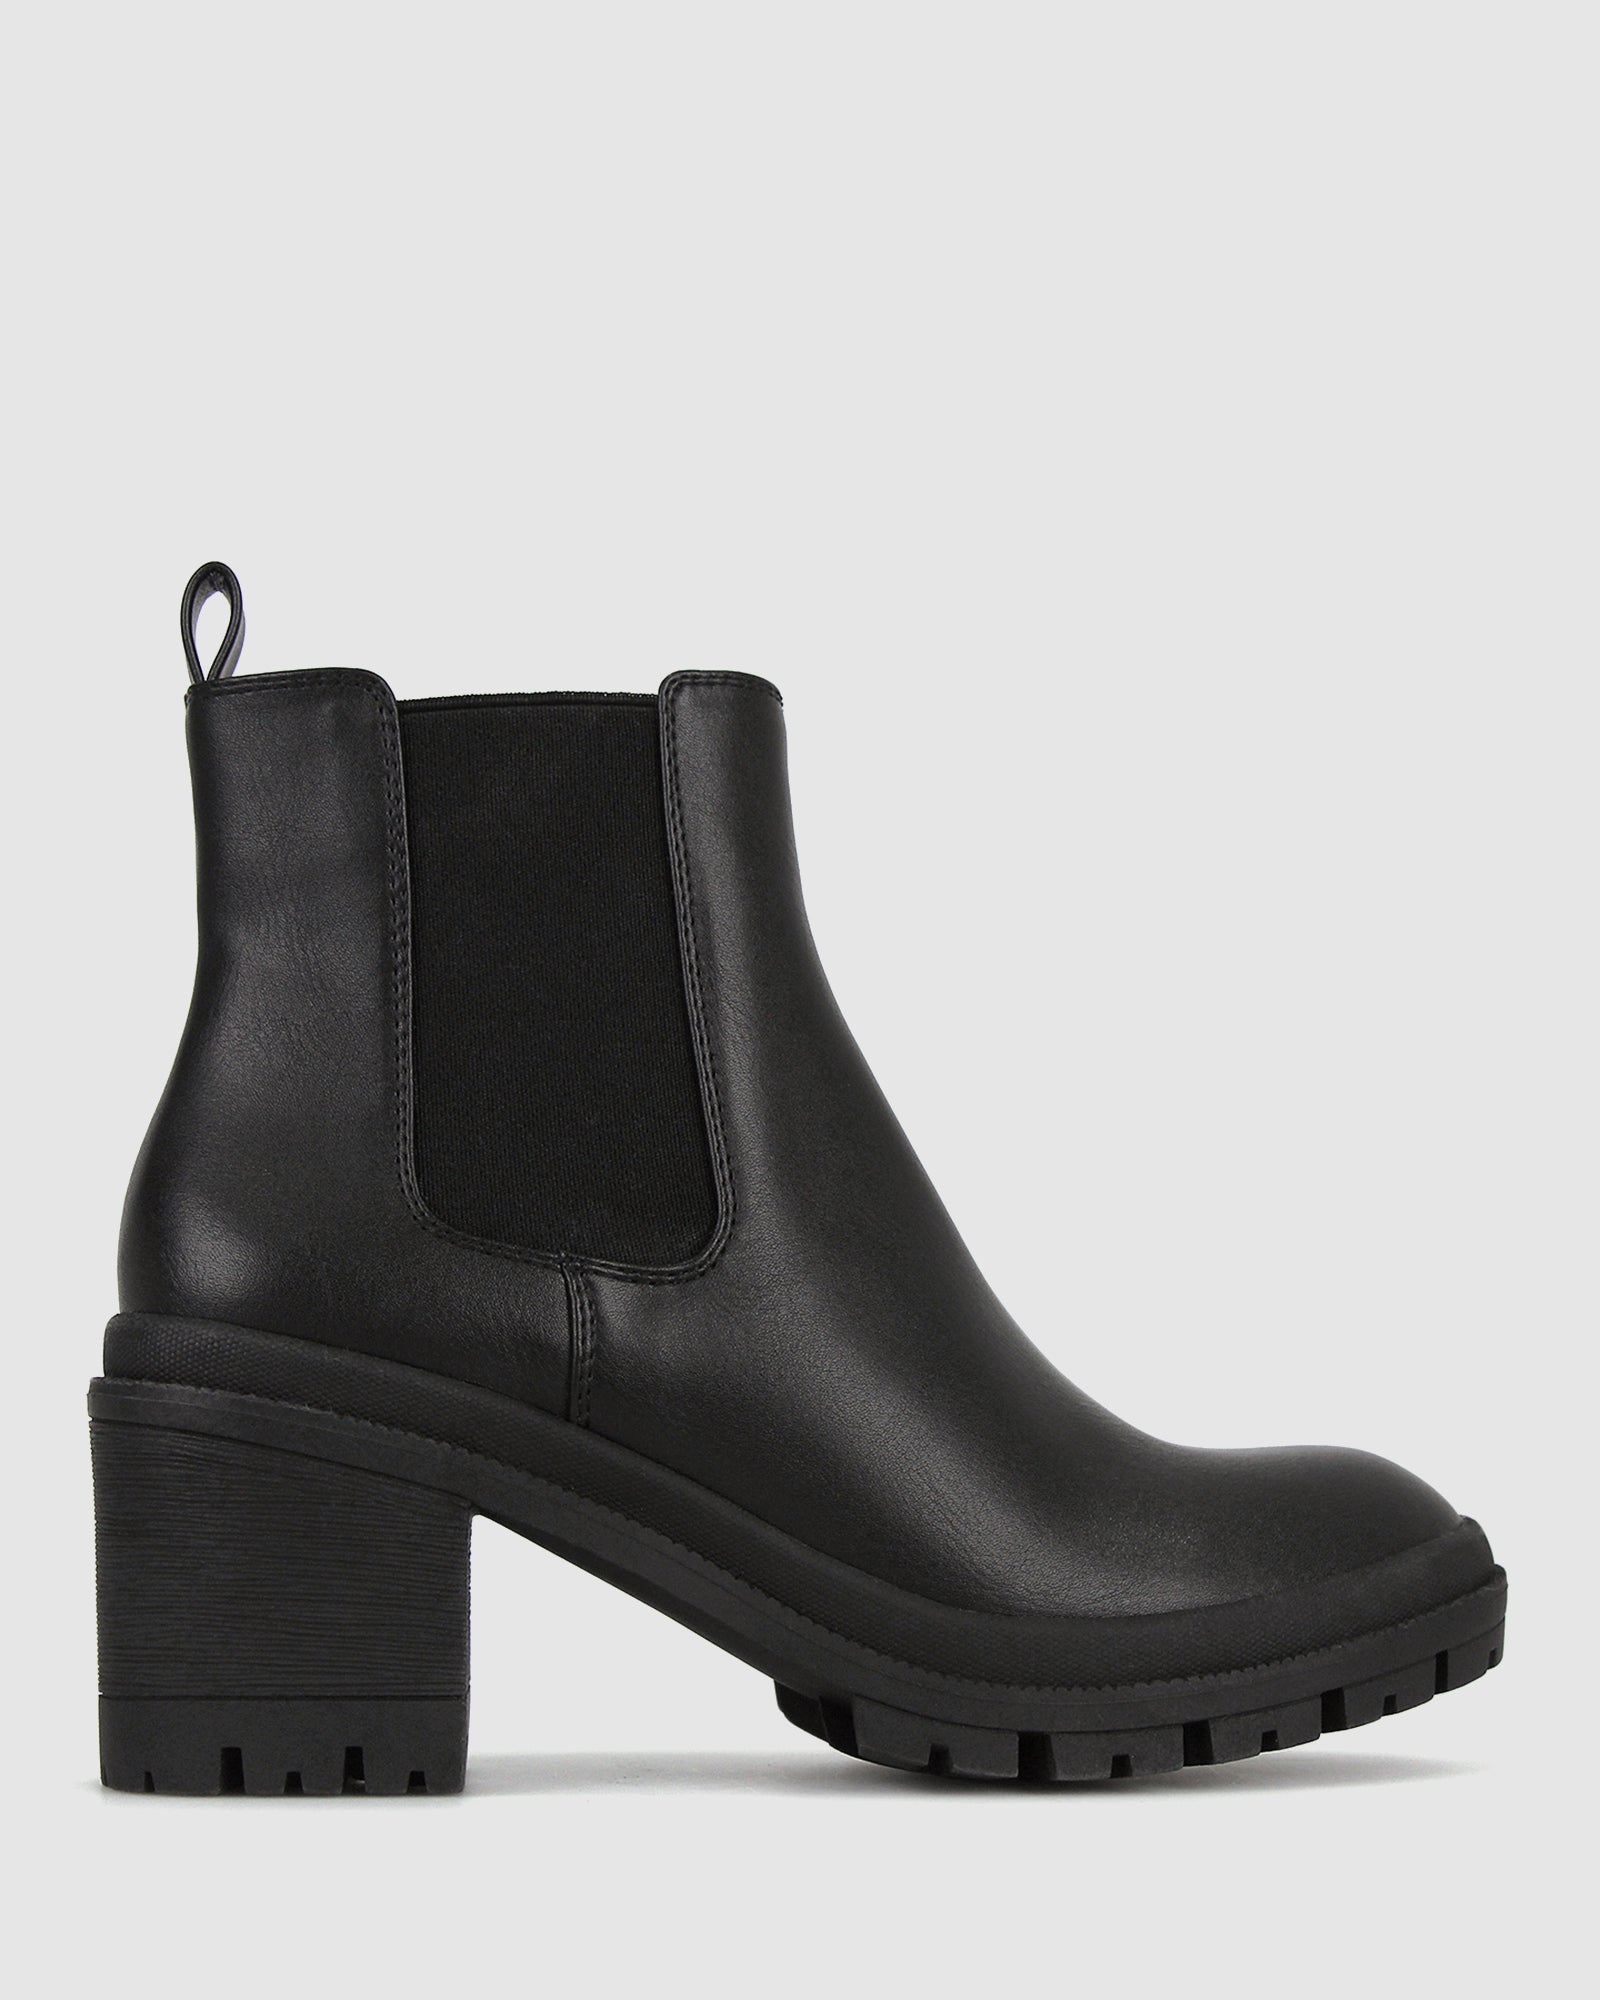 Buy PARADDOX Block Heel Chelsea Boots by Betts online - Betts